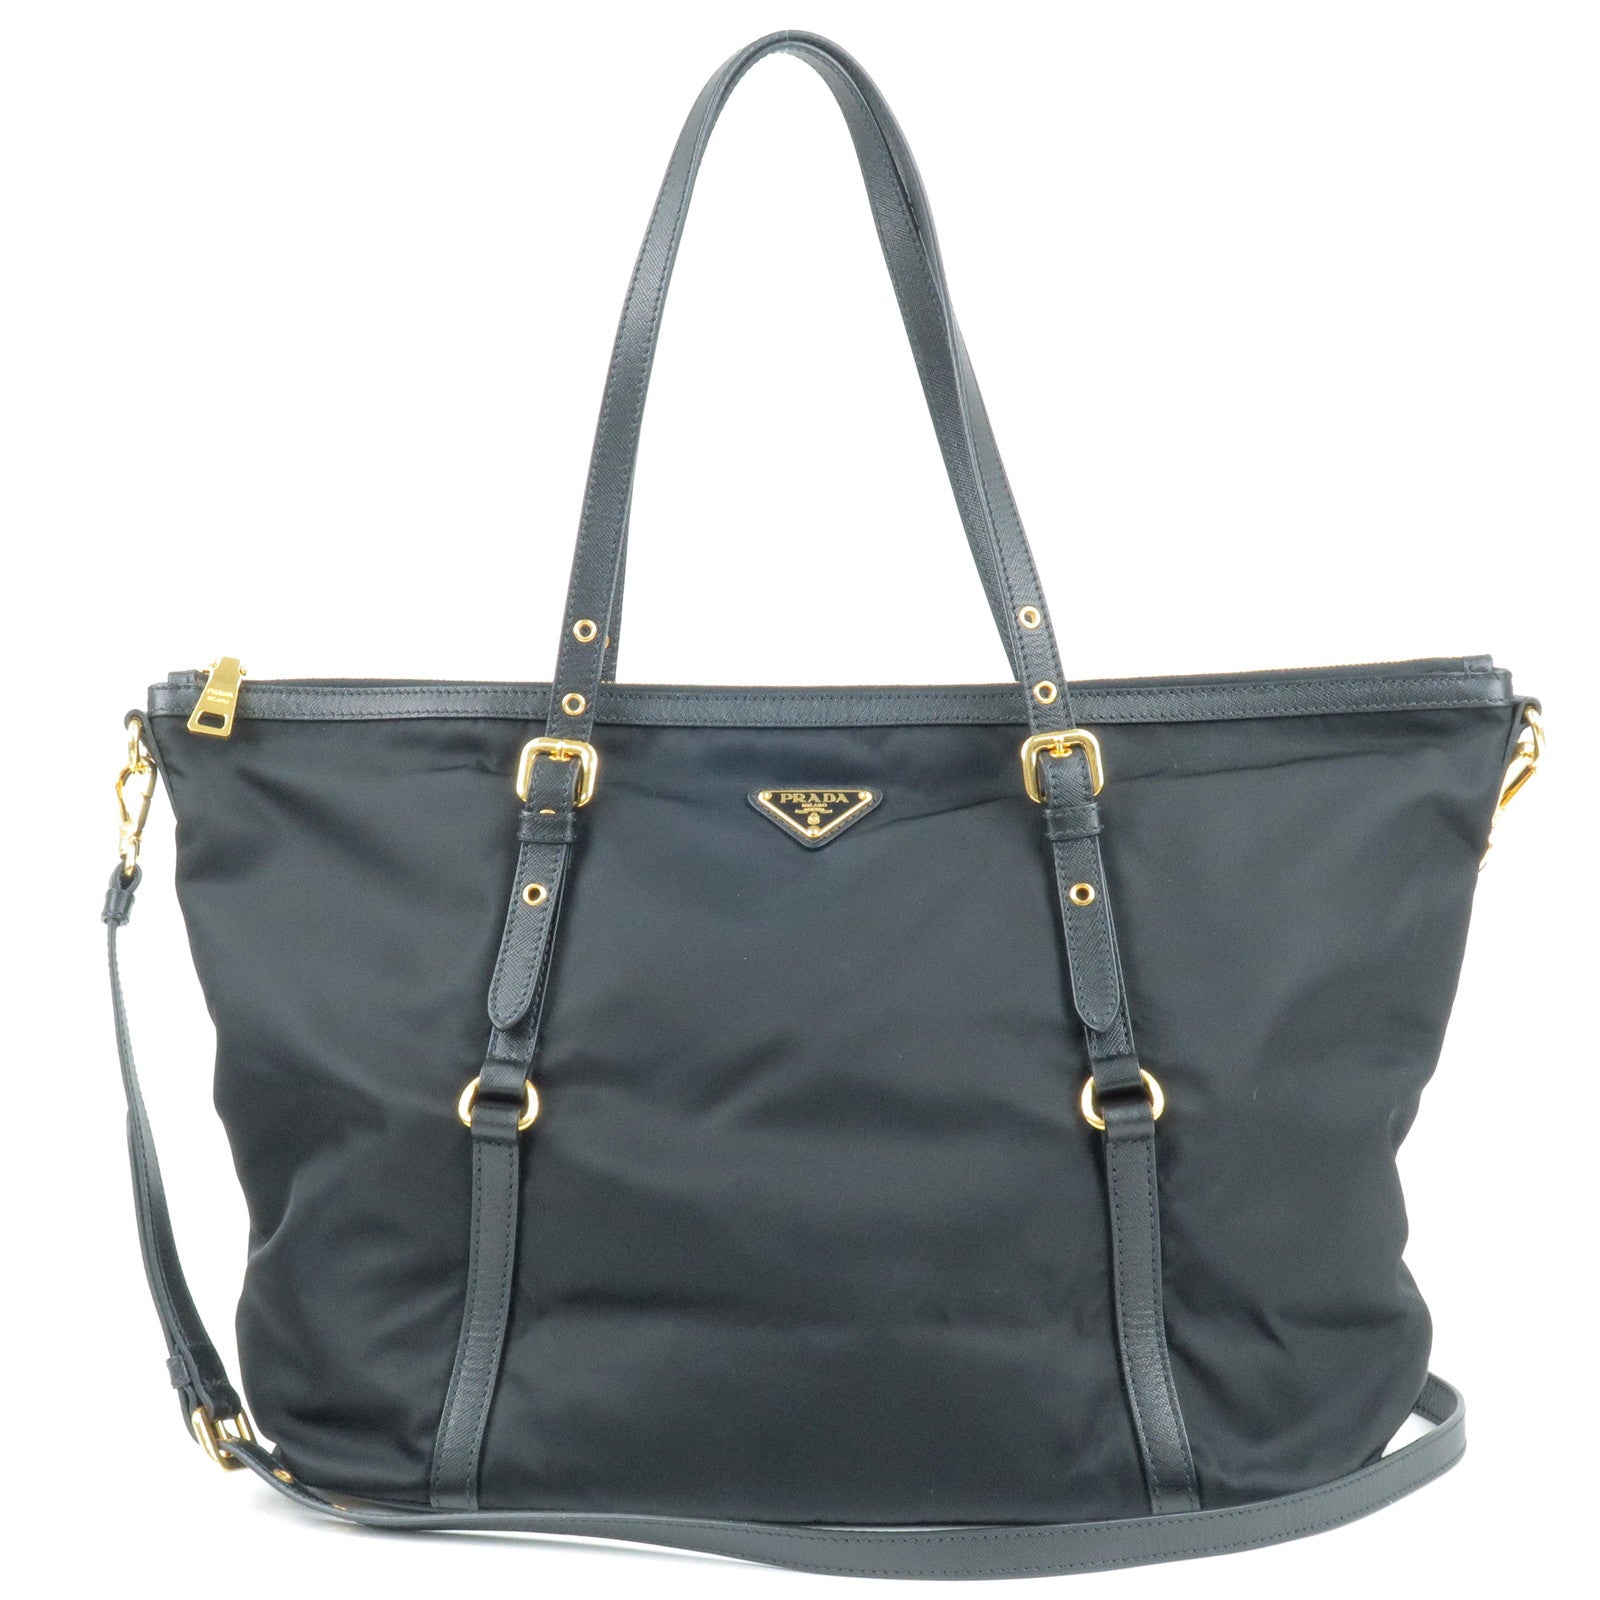 Designer Women Tote Bags Ladies Shoulder Bag Autumn Winter Nylon Handbags  New